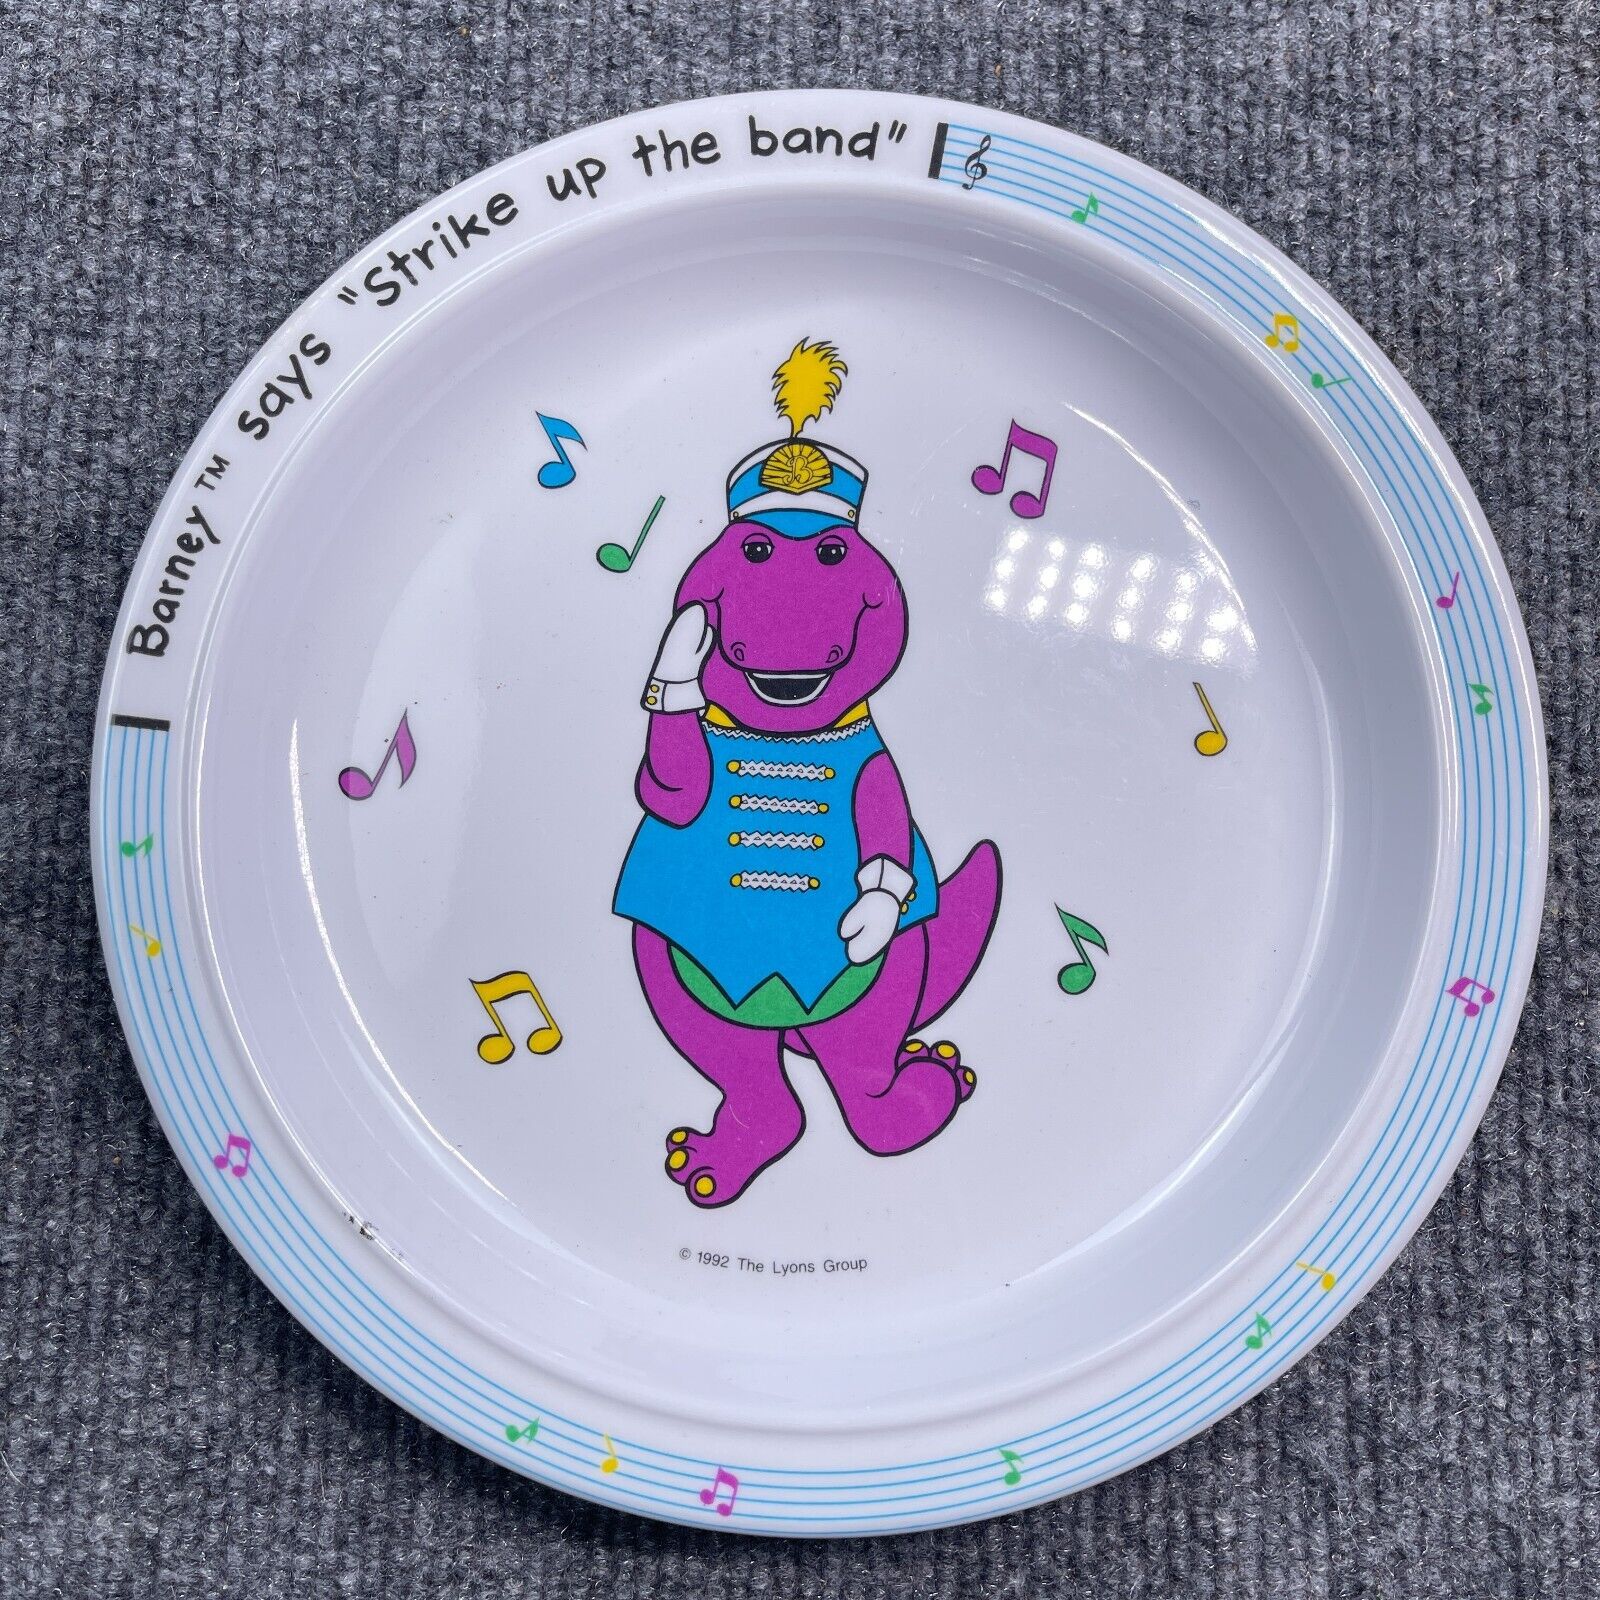 Vintage Barney Plate 1992  “Strike Up The Band\